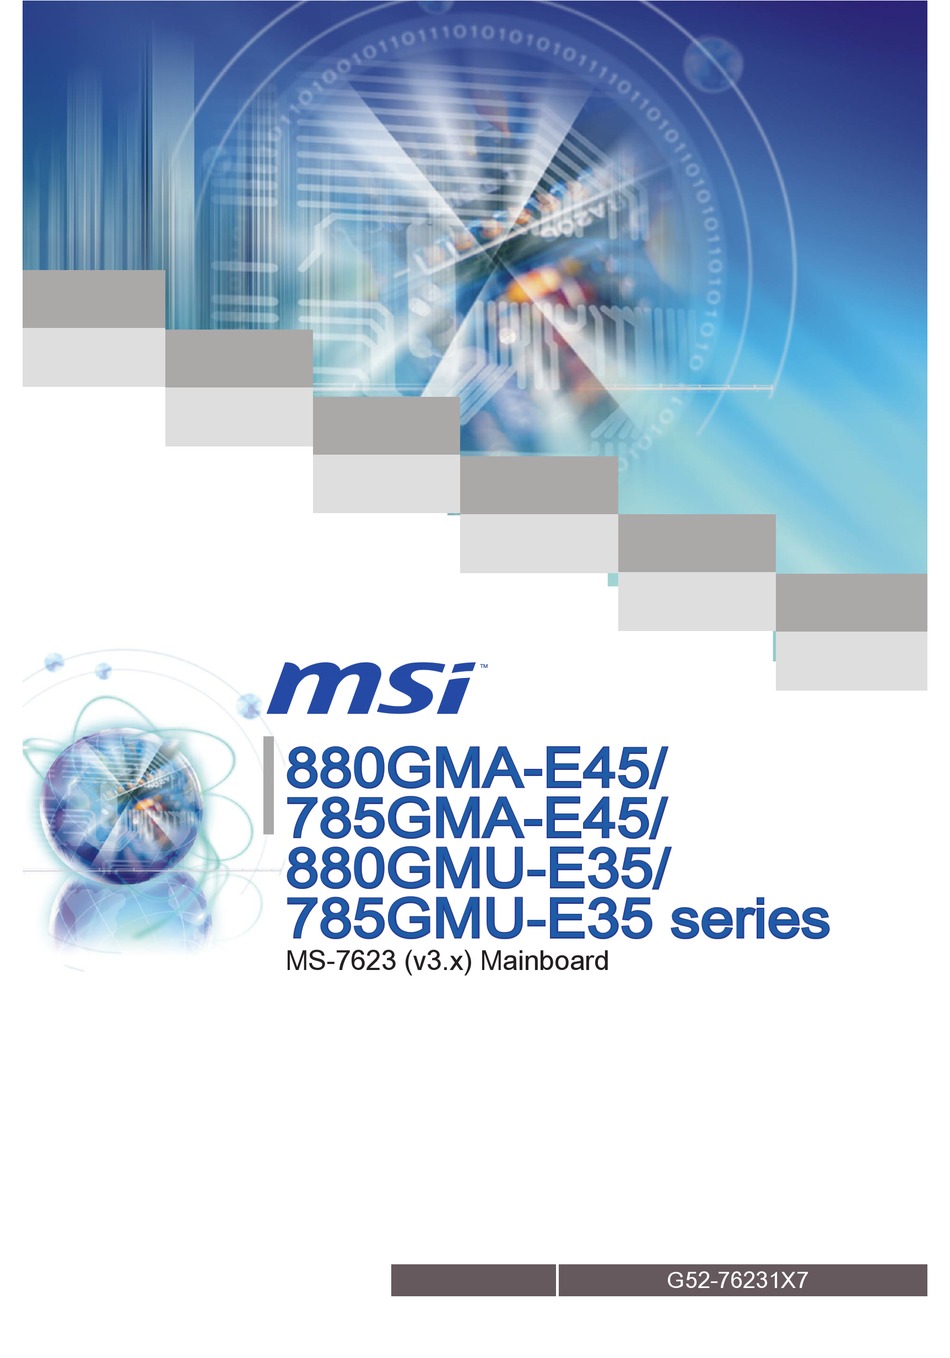 MSI 880GMA-E45 SERIES USER MANUAL Pdf Download | ManualsLib